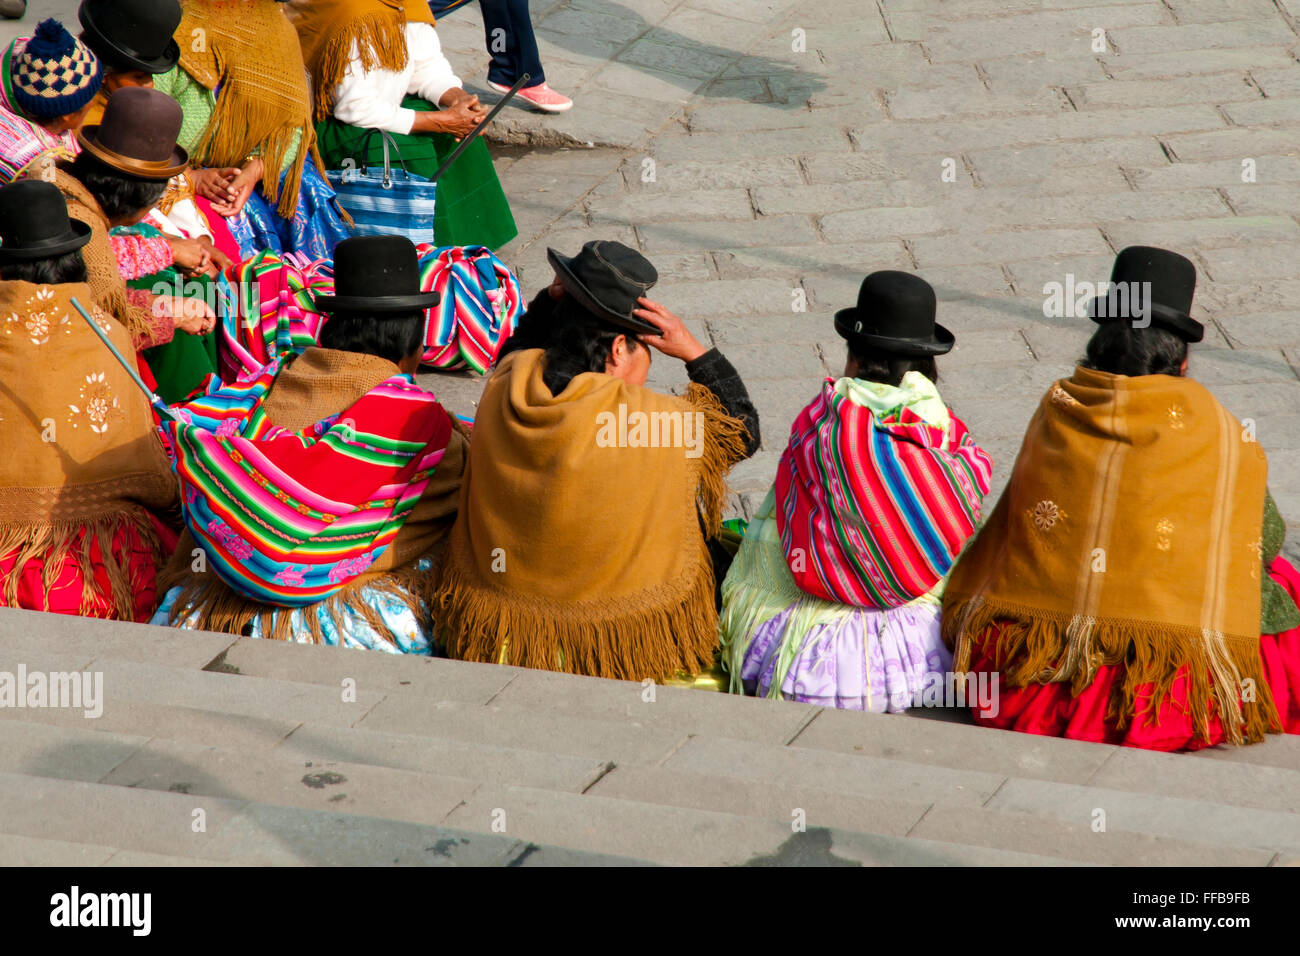 Women in Bowler Hats - La Paz - Bolivia Stock Photo - Alamy